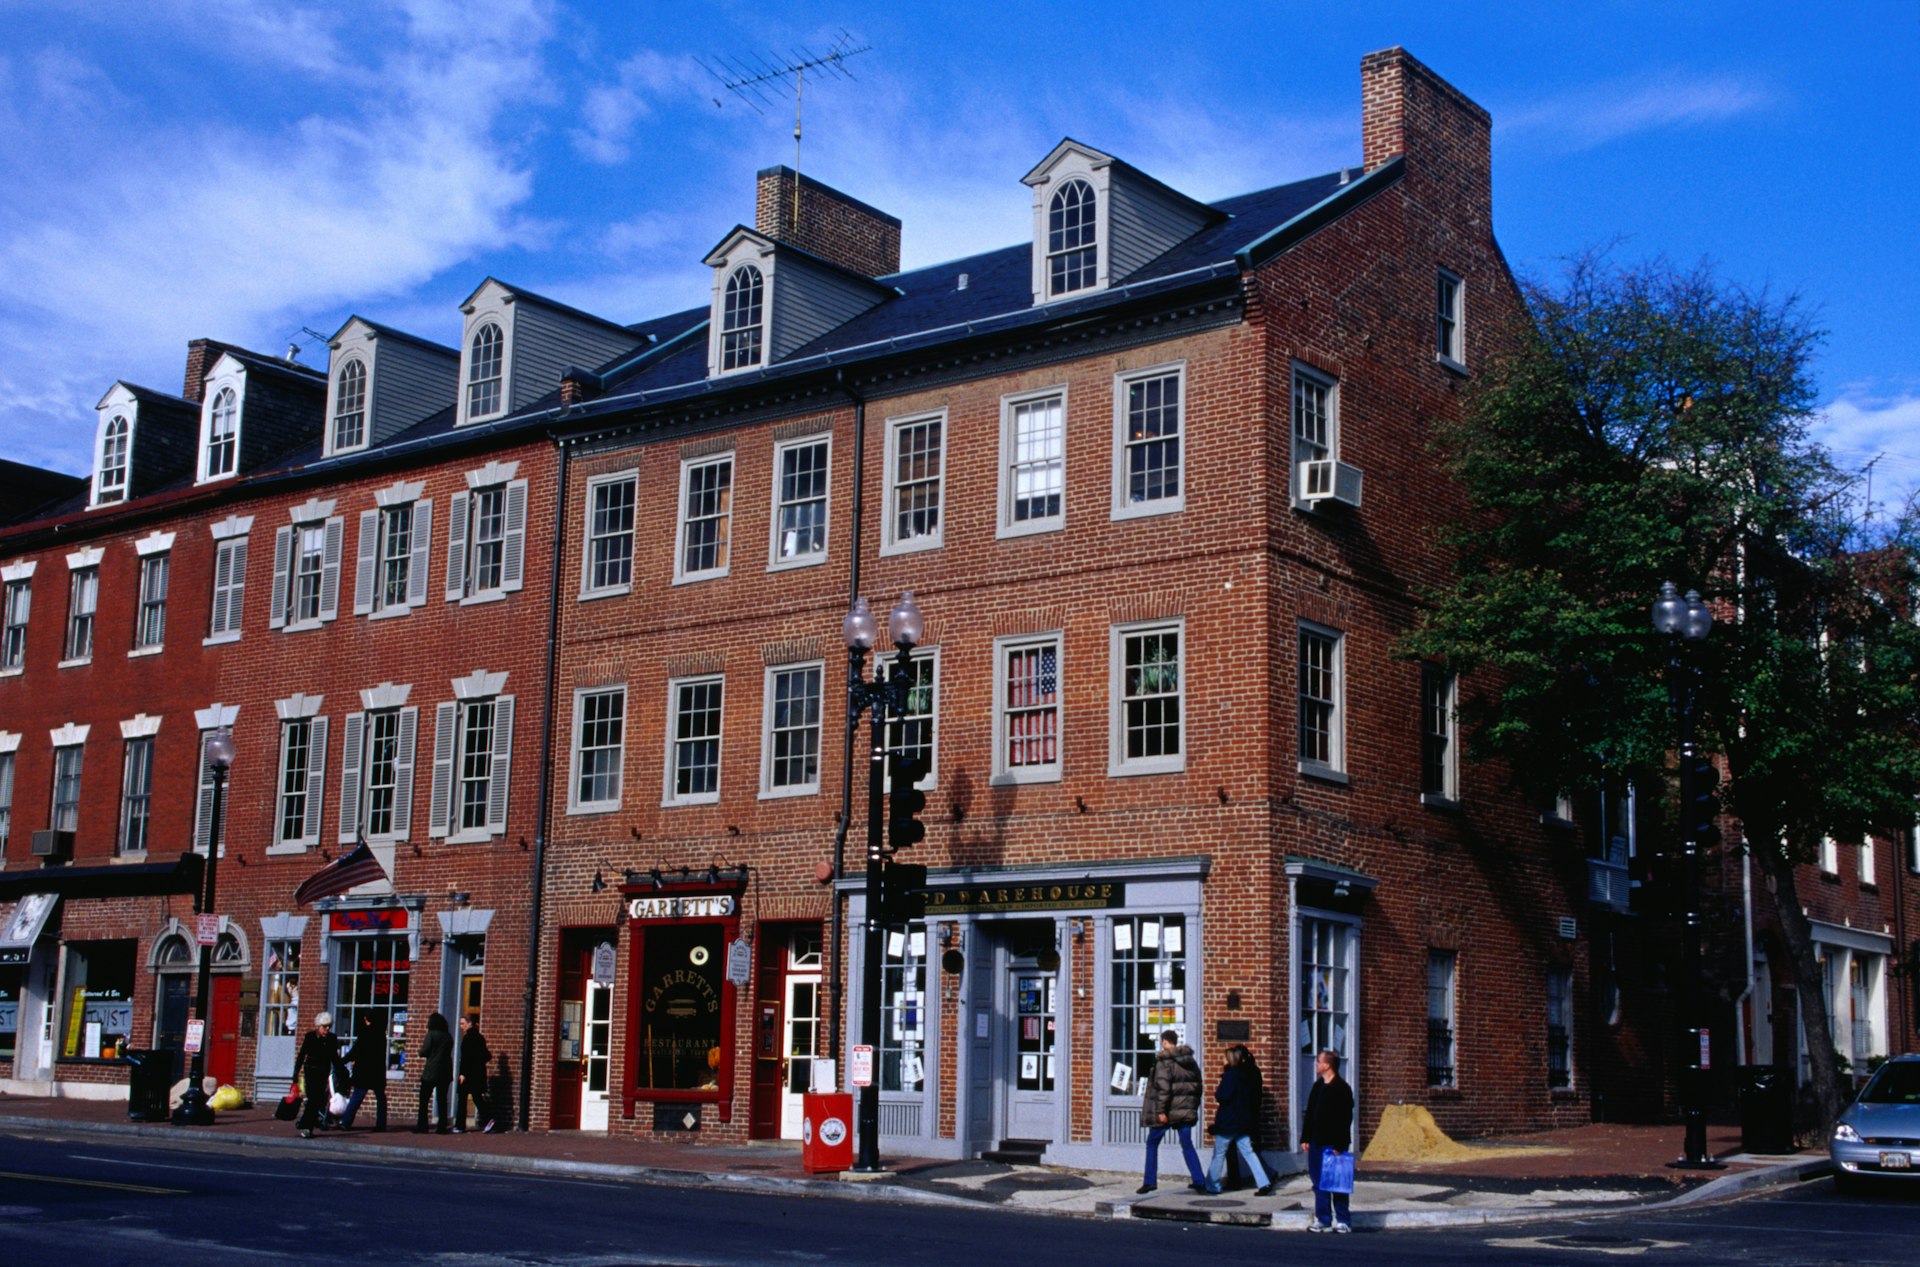 People walk by historic brick buildings in Georgetown, Washington, DC, USA